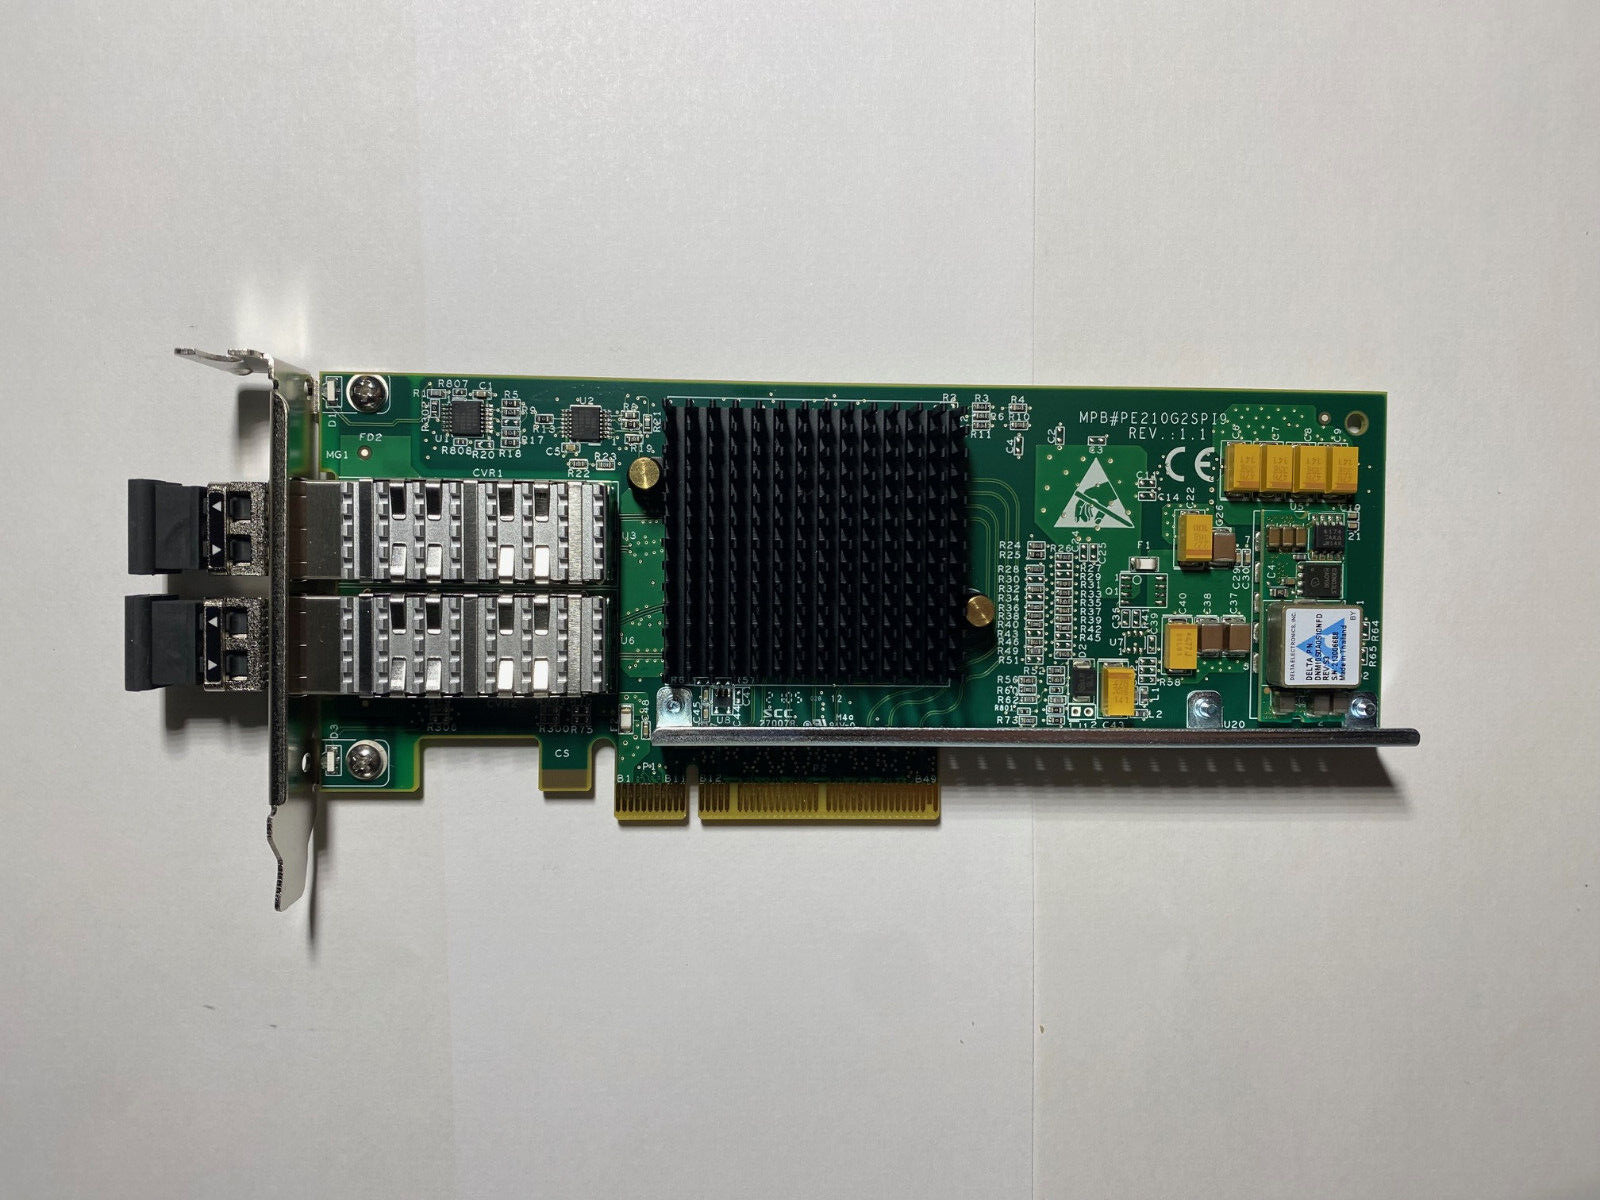 Silicom Dual-Port Fiber (SR) 10 gb eth PCI Server Adapter PN: PE210G2SPI9B-XR-LP